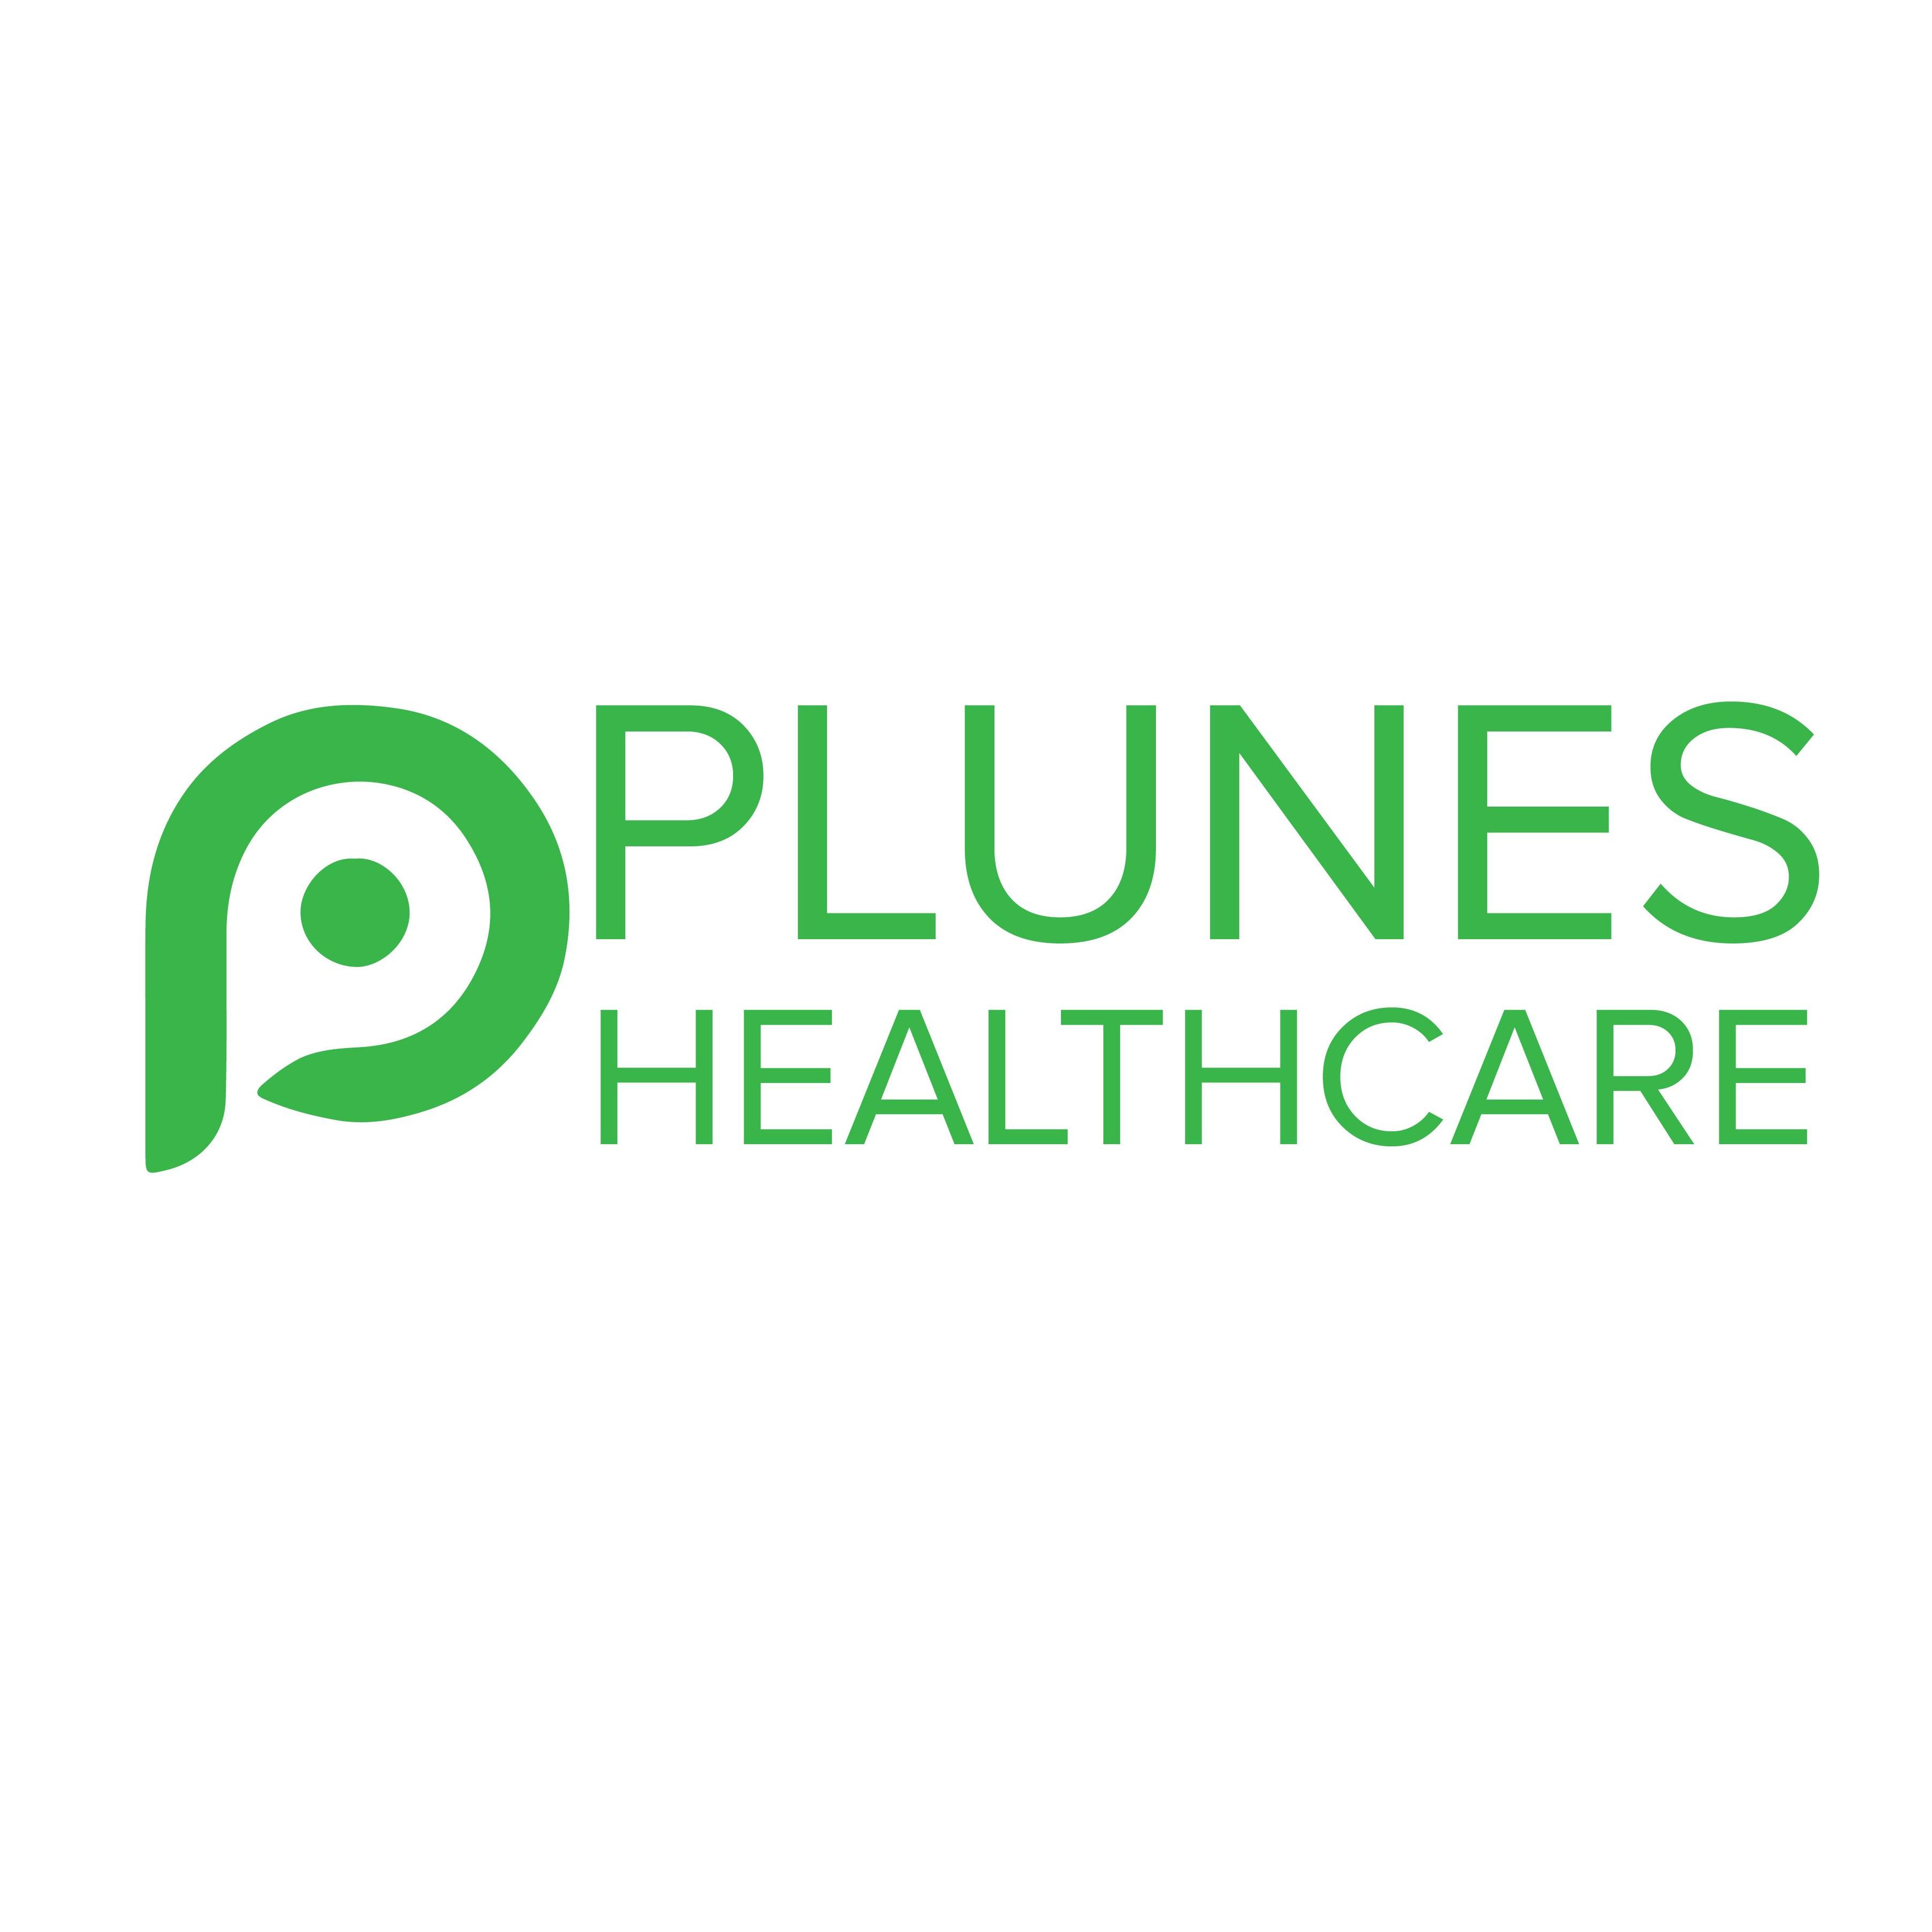 Plunes Healthcare